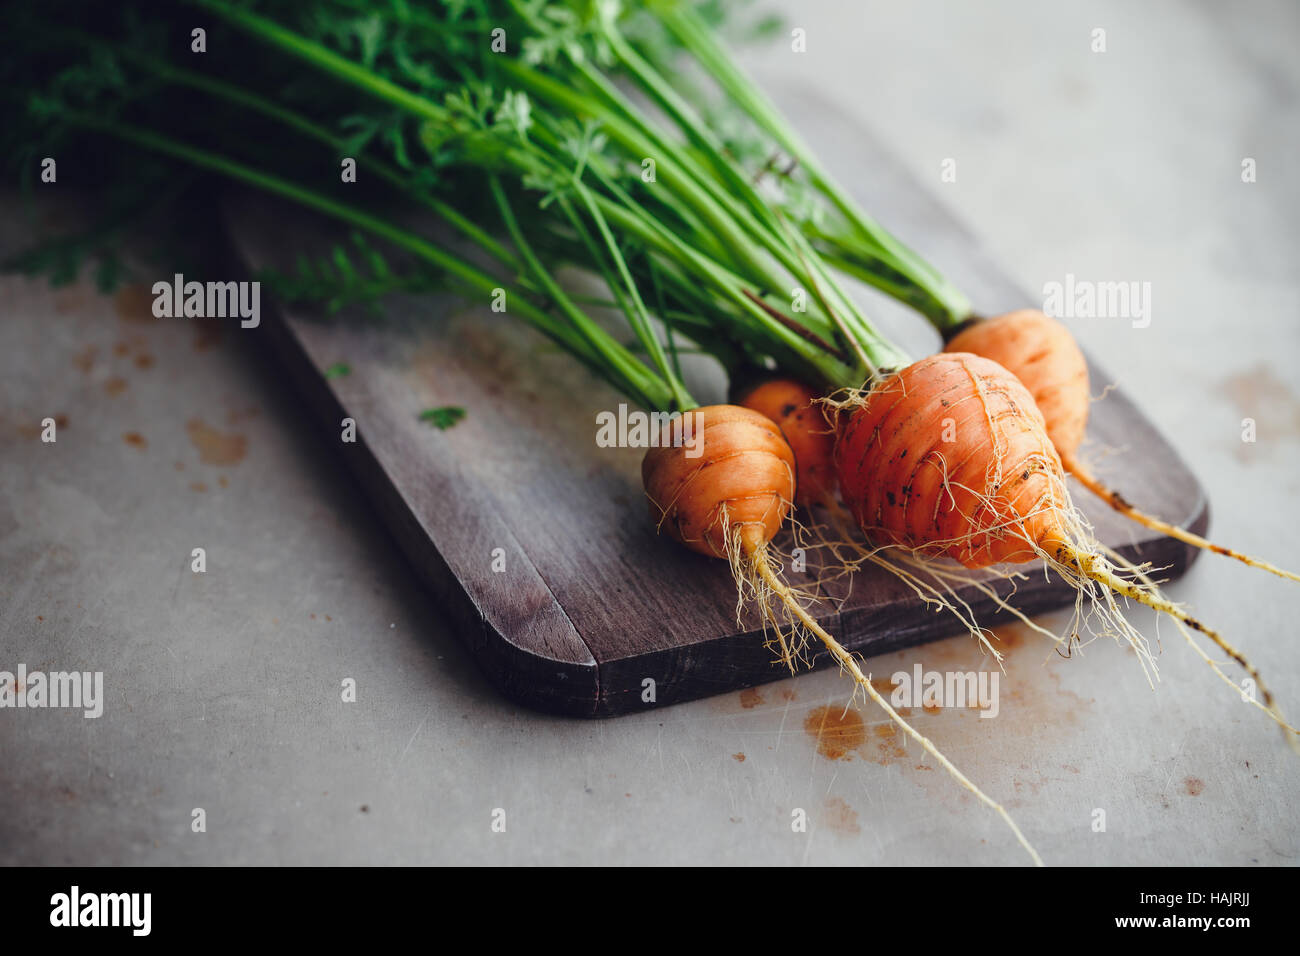 Bunch of small, round carrots (Parisian Heirloom Carrots). A bunch of carrots and leafy tops on a wooden board Stock Photo